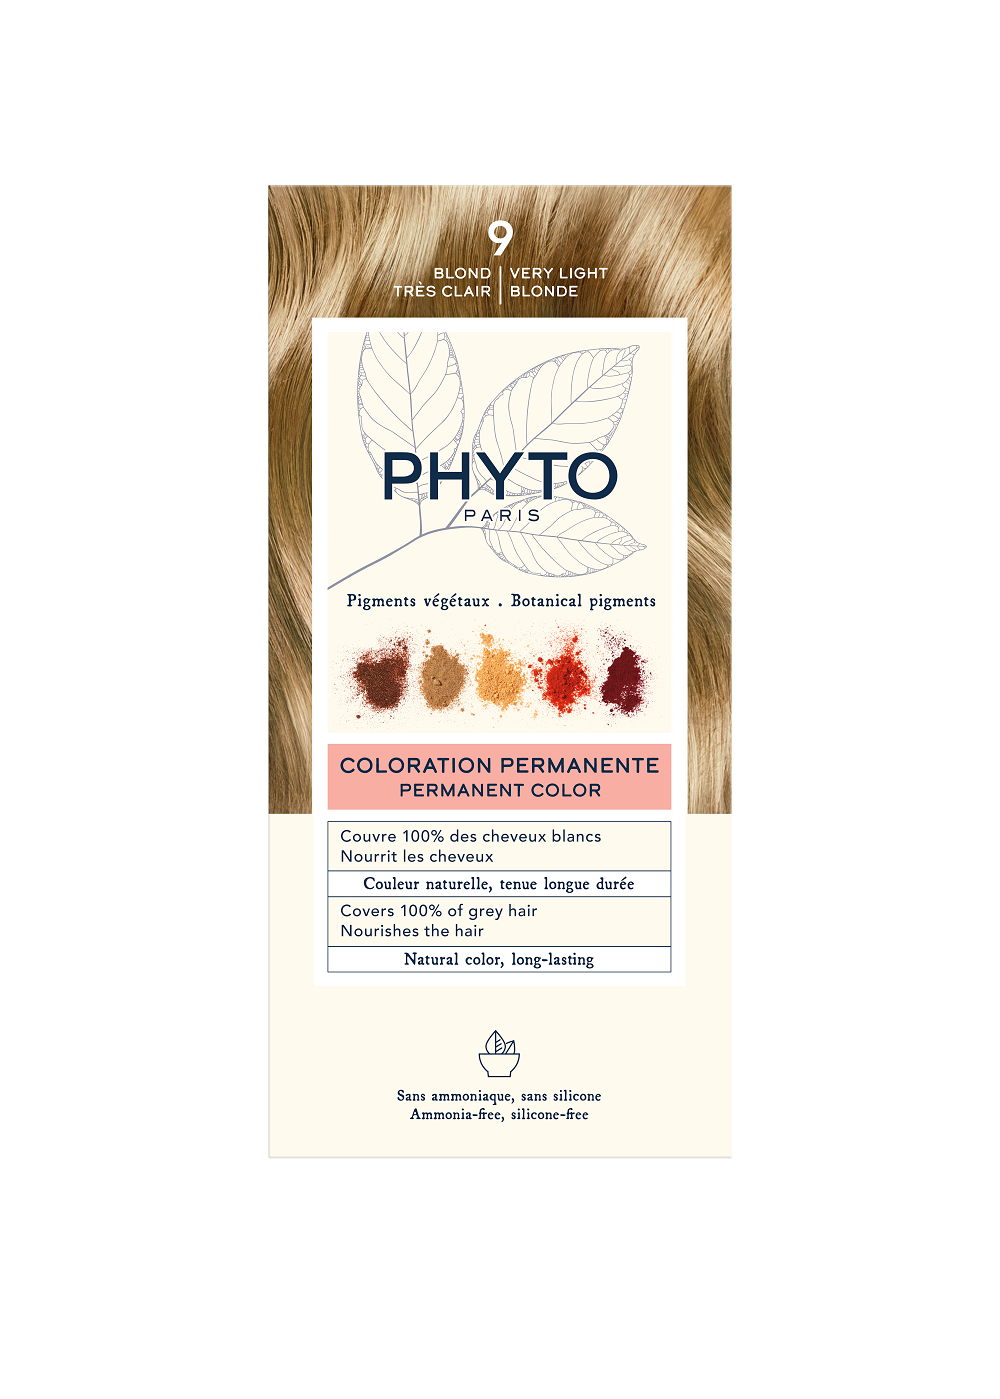 New Phytocolor 9 Very Light Blonde